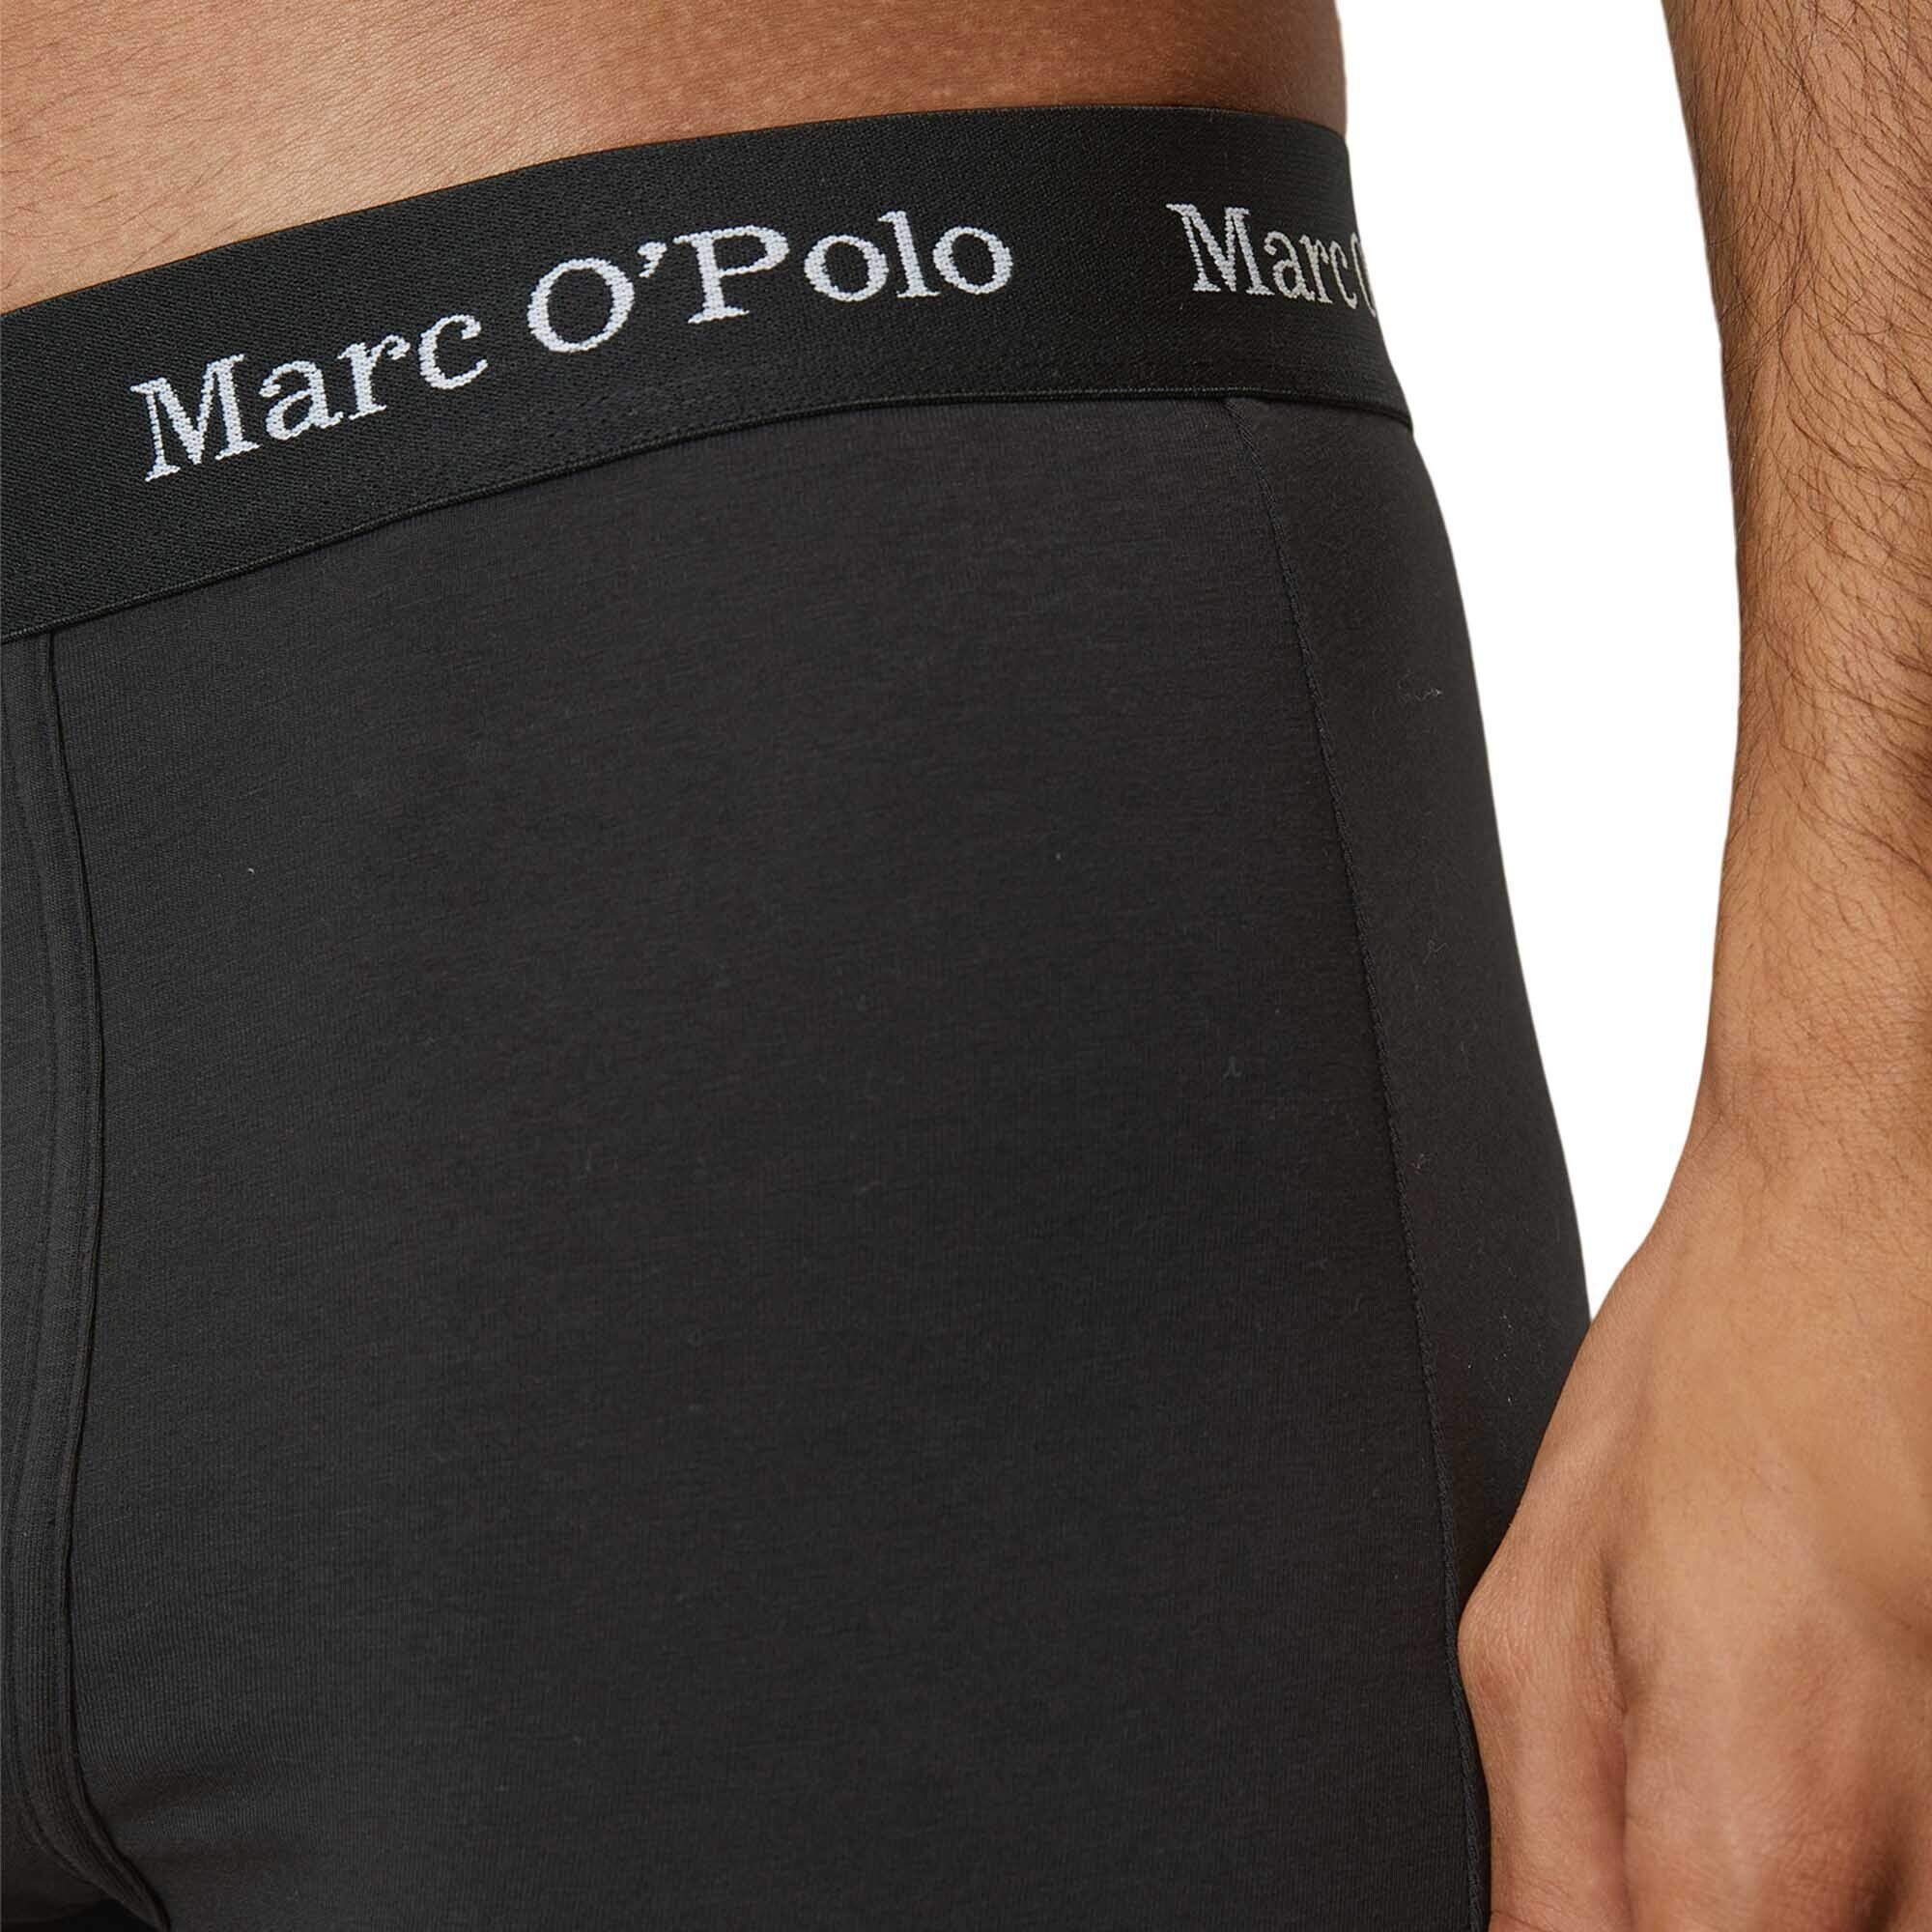 Marc O'Polo Boxer Schwarz 3er Boxer Shorts, Pack Herren - Boxer,Organic